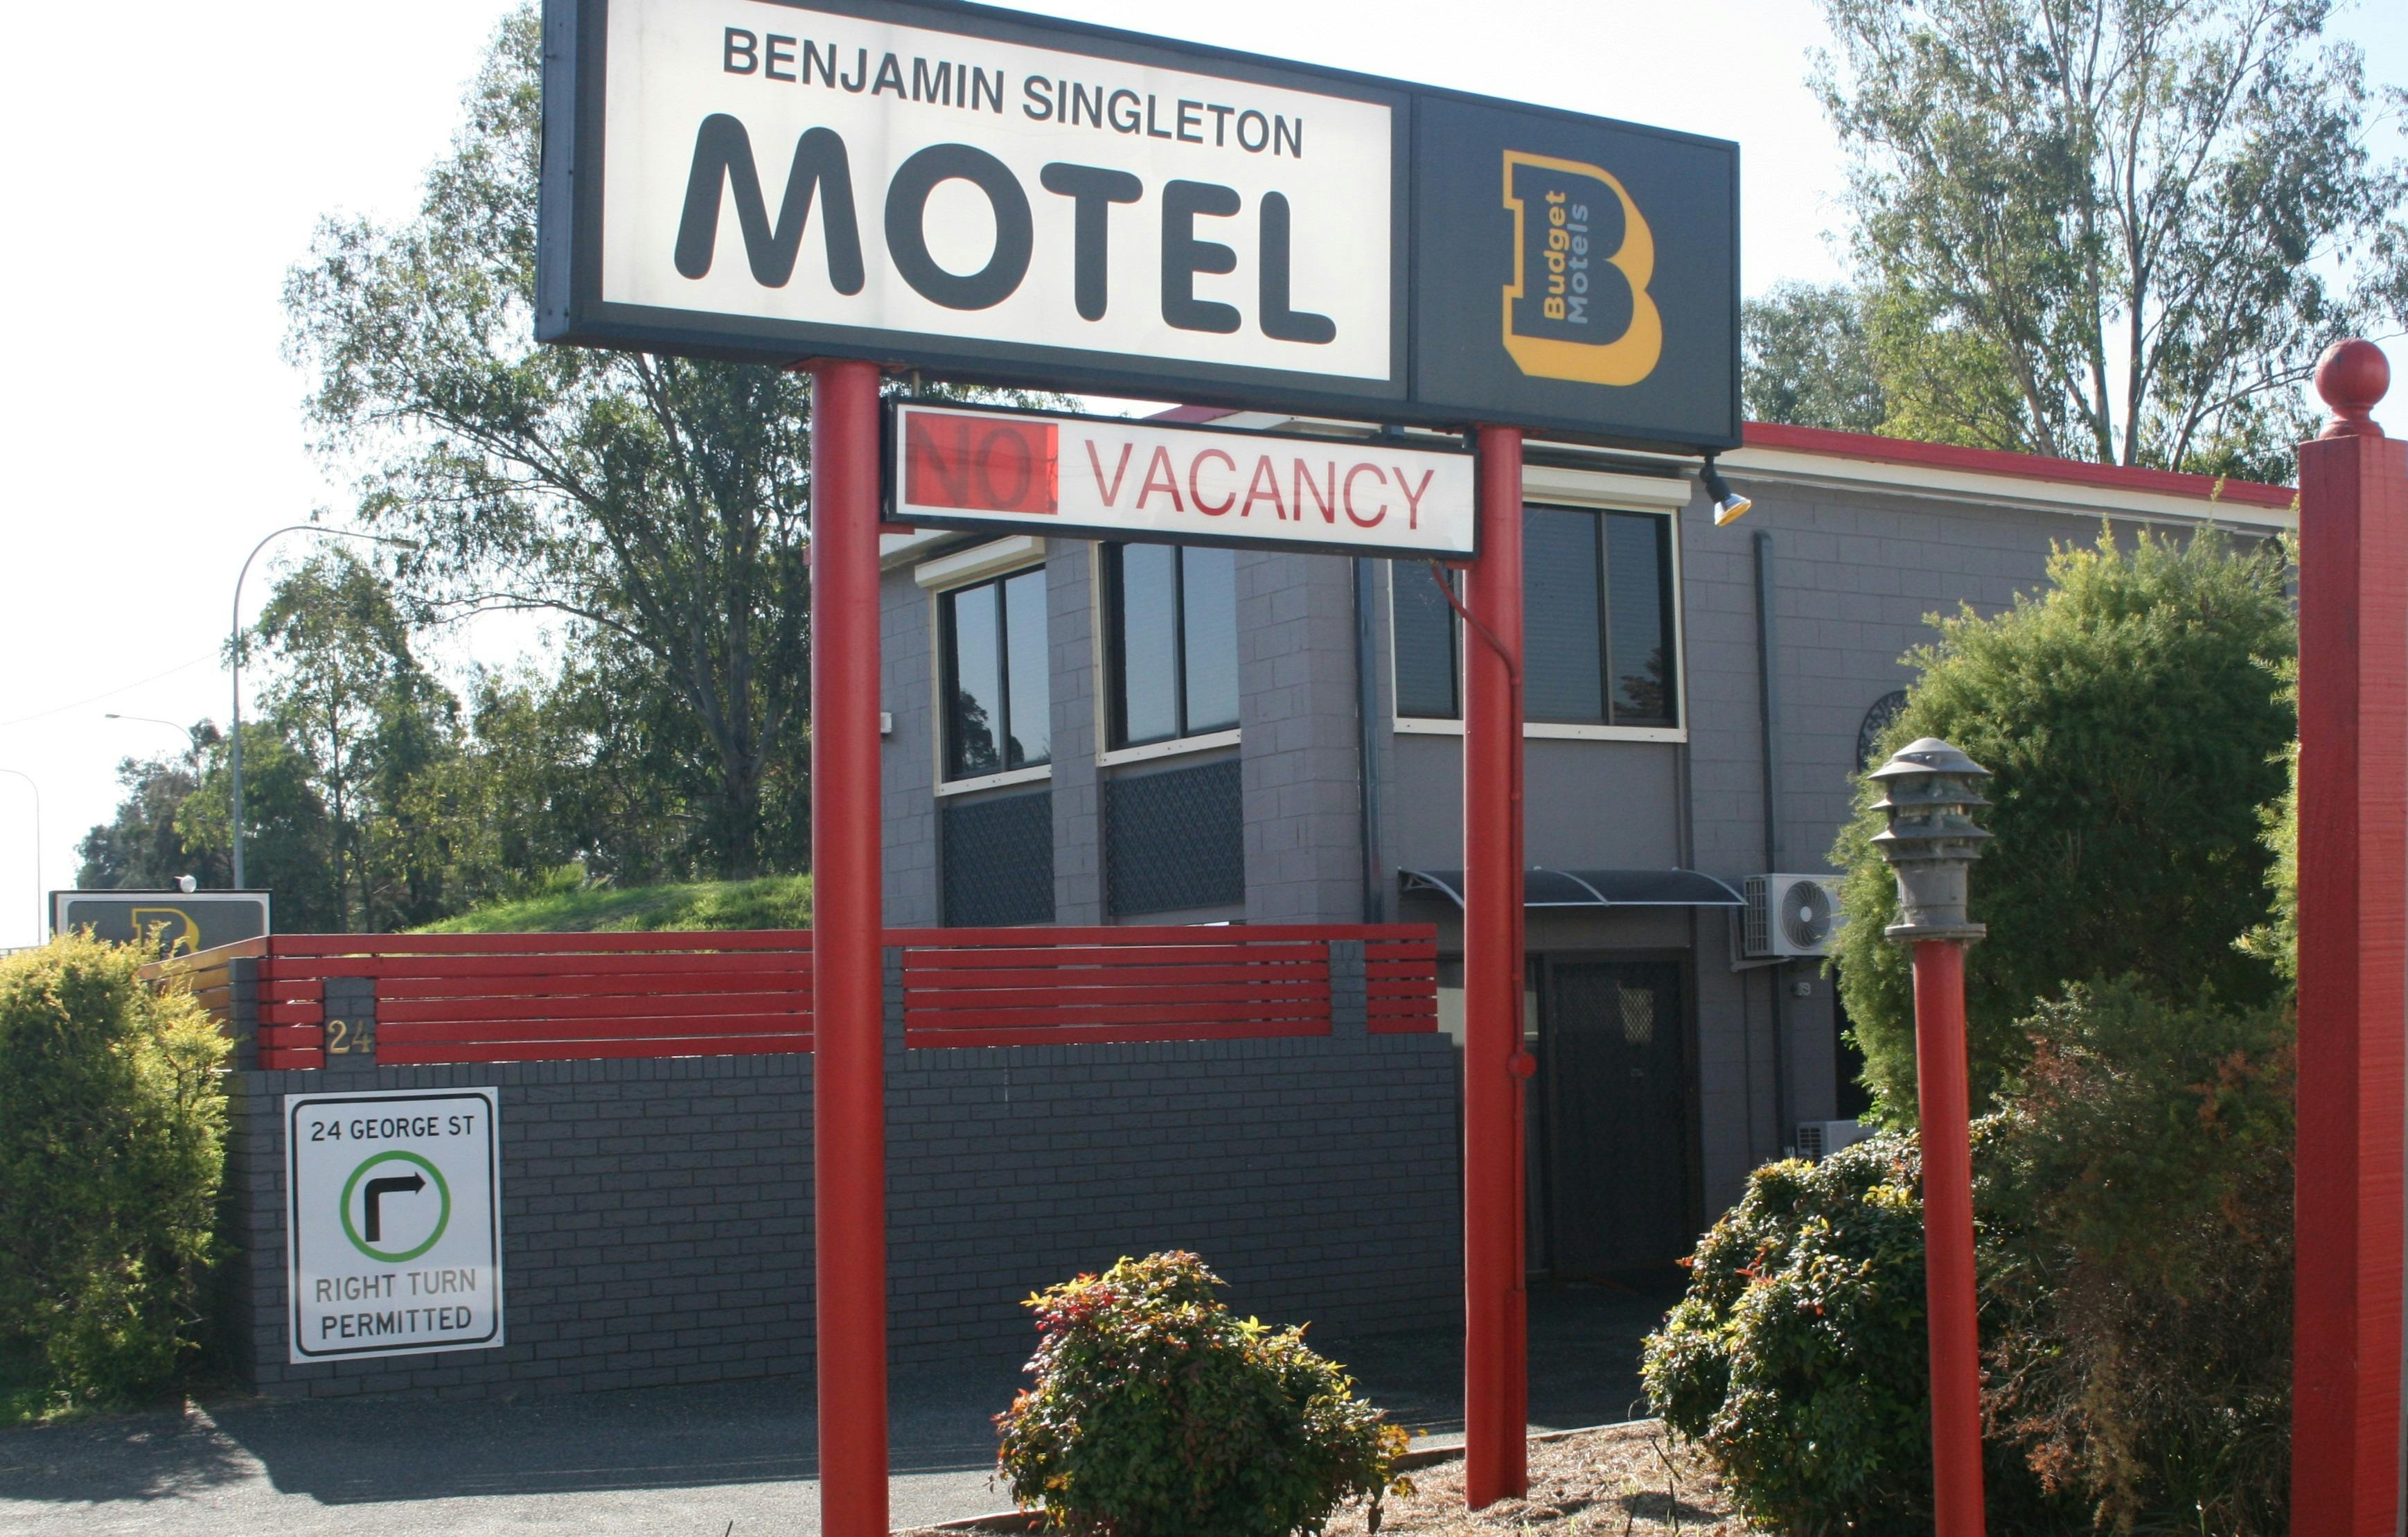 Benjamin Singleton Motel | NSW Holidays & Accommodation, Things to Do